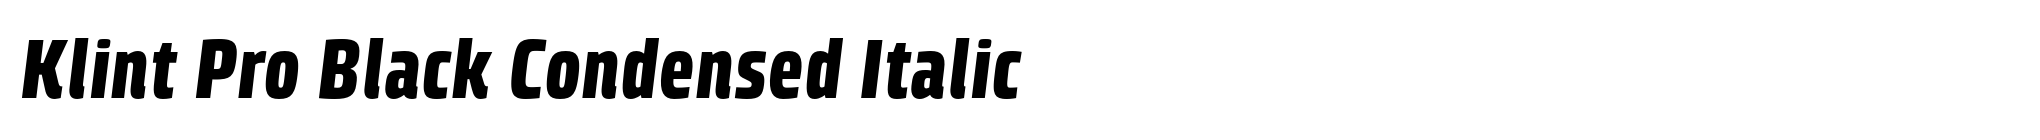 Klint Pro Black Condensed Italic image